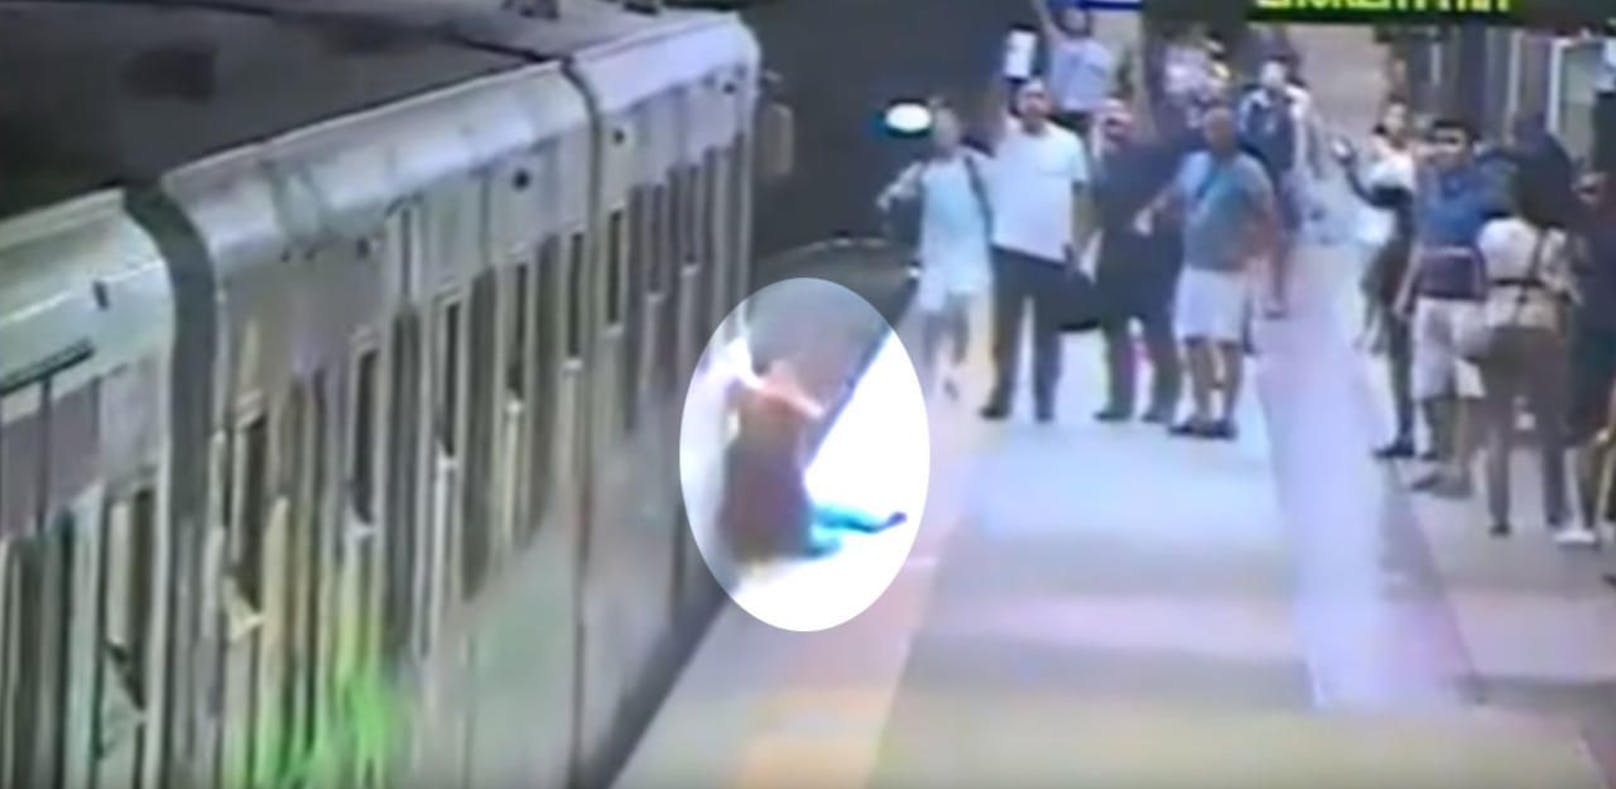 U-Bahnfahrer aß bei Fahrt Pasta - Frau mitgeschleift